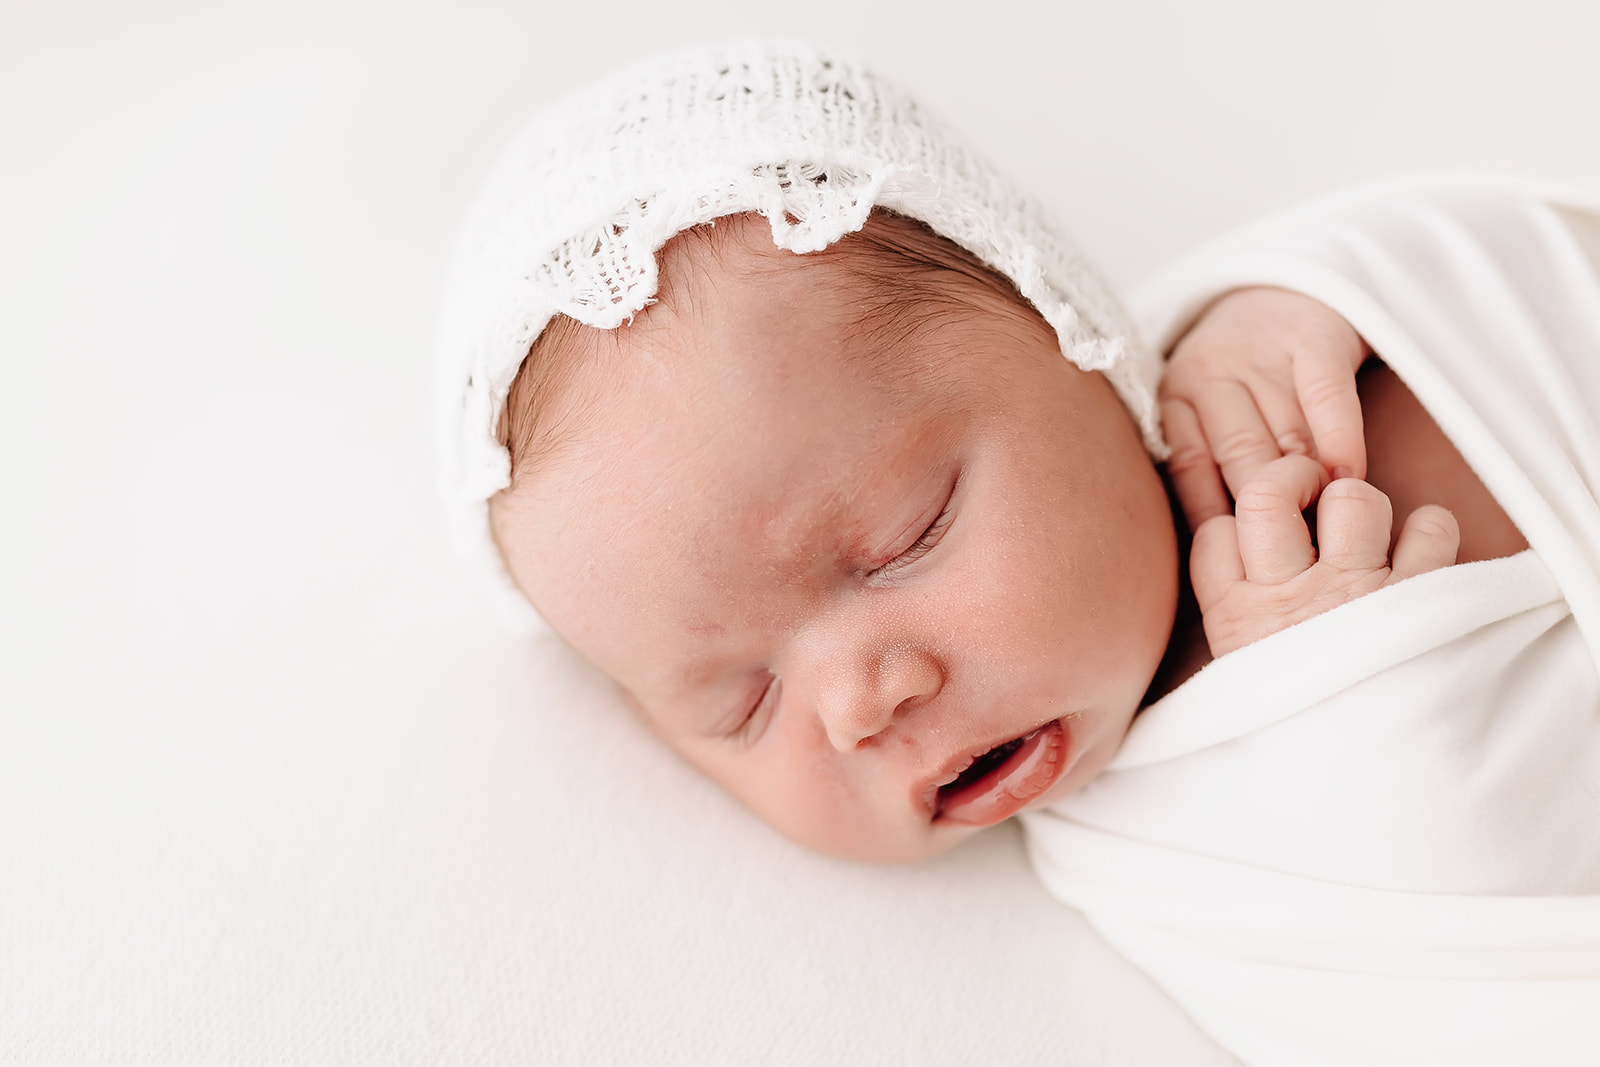 Details of a sleeping newborn baby in white bonnet